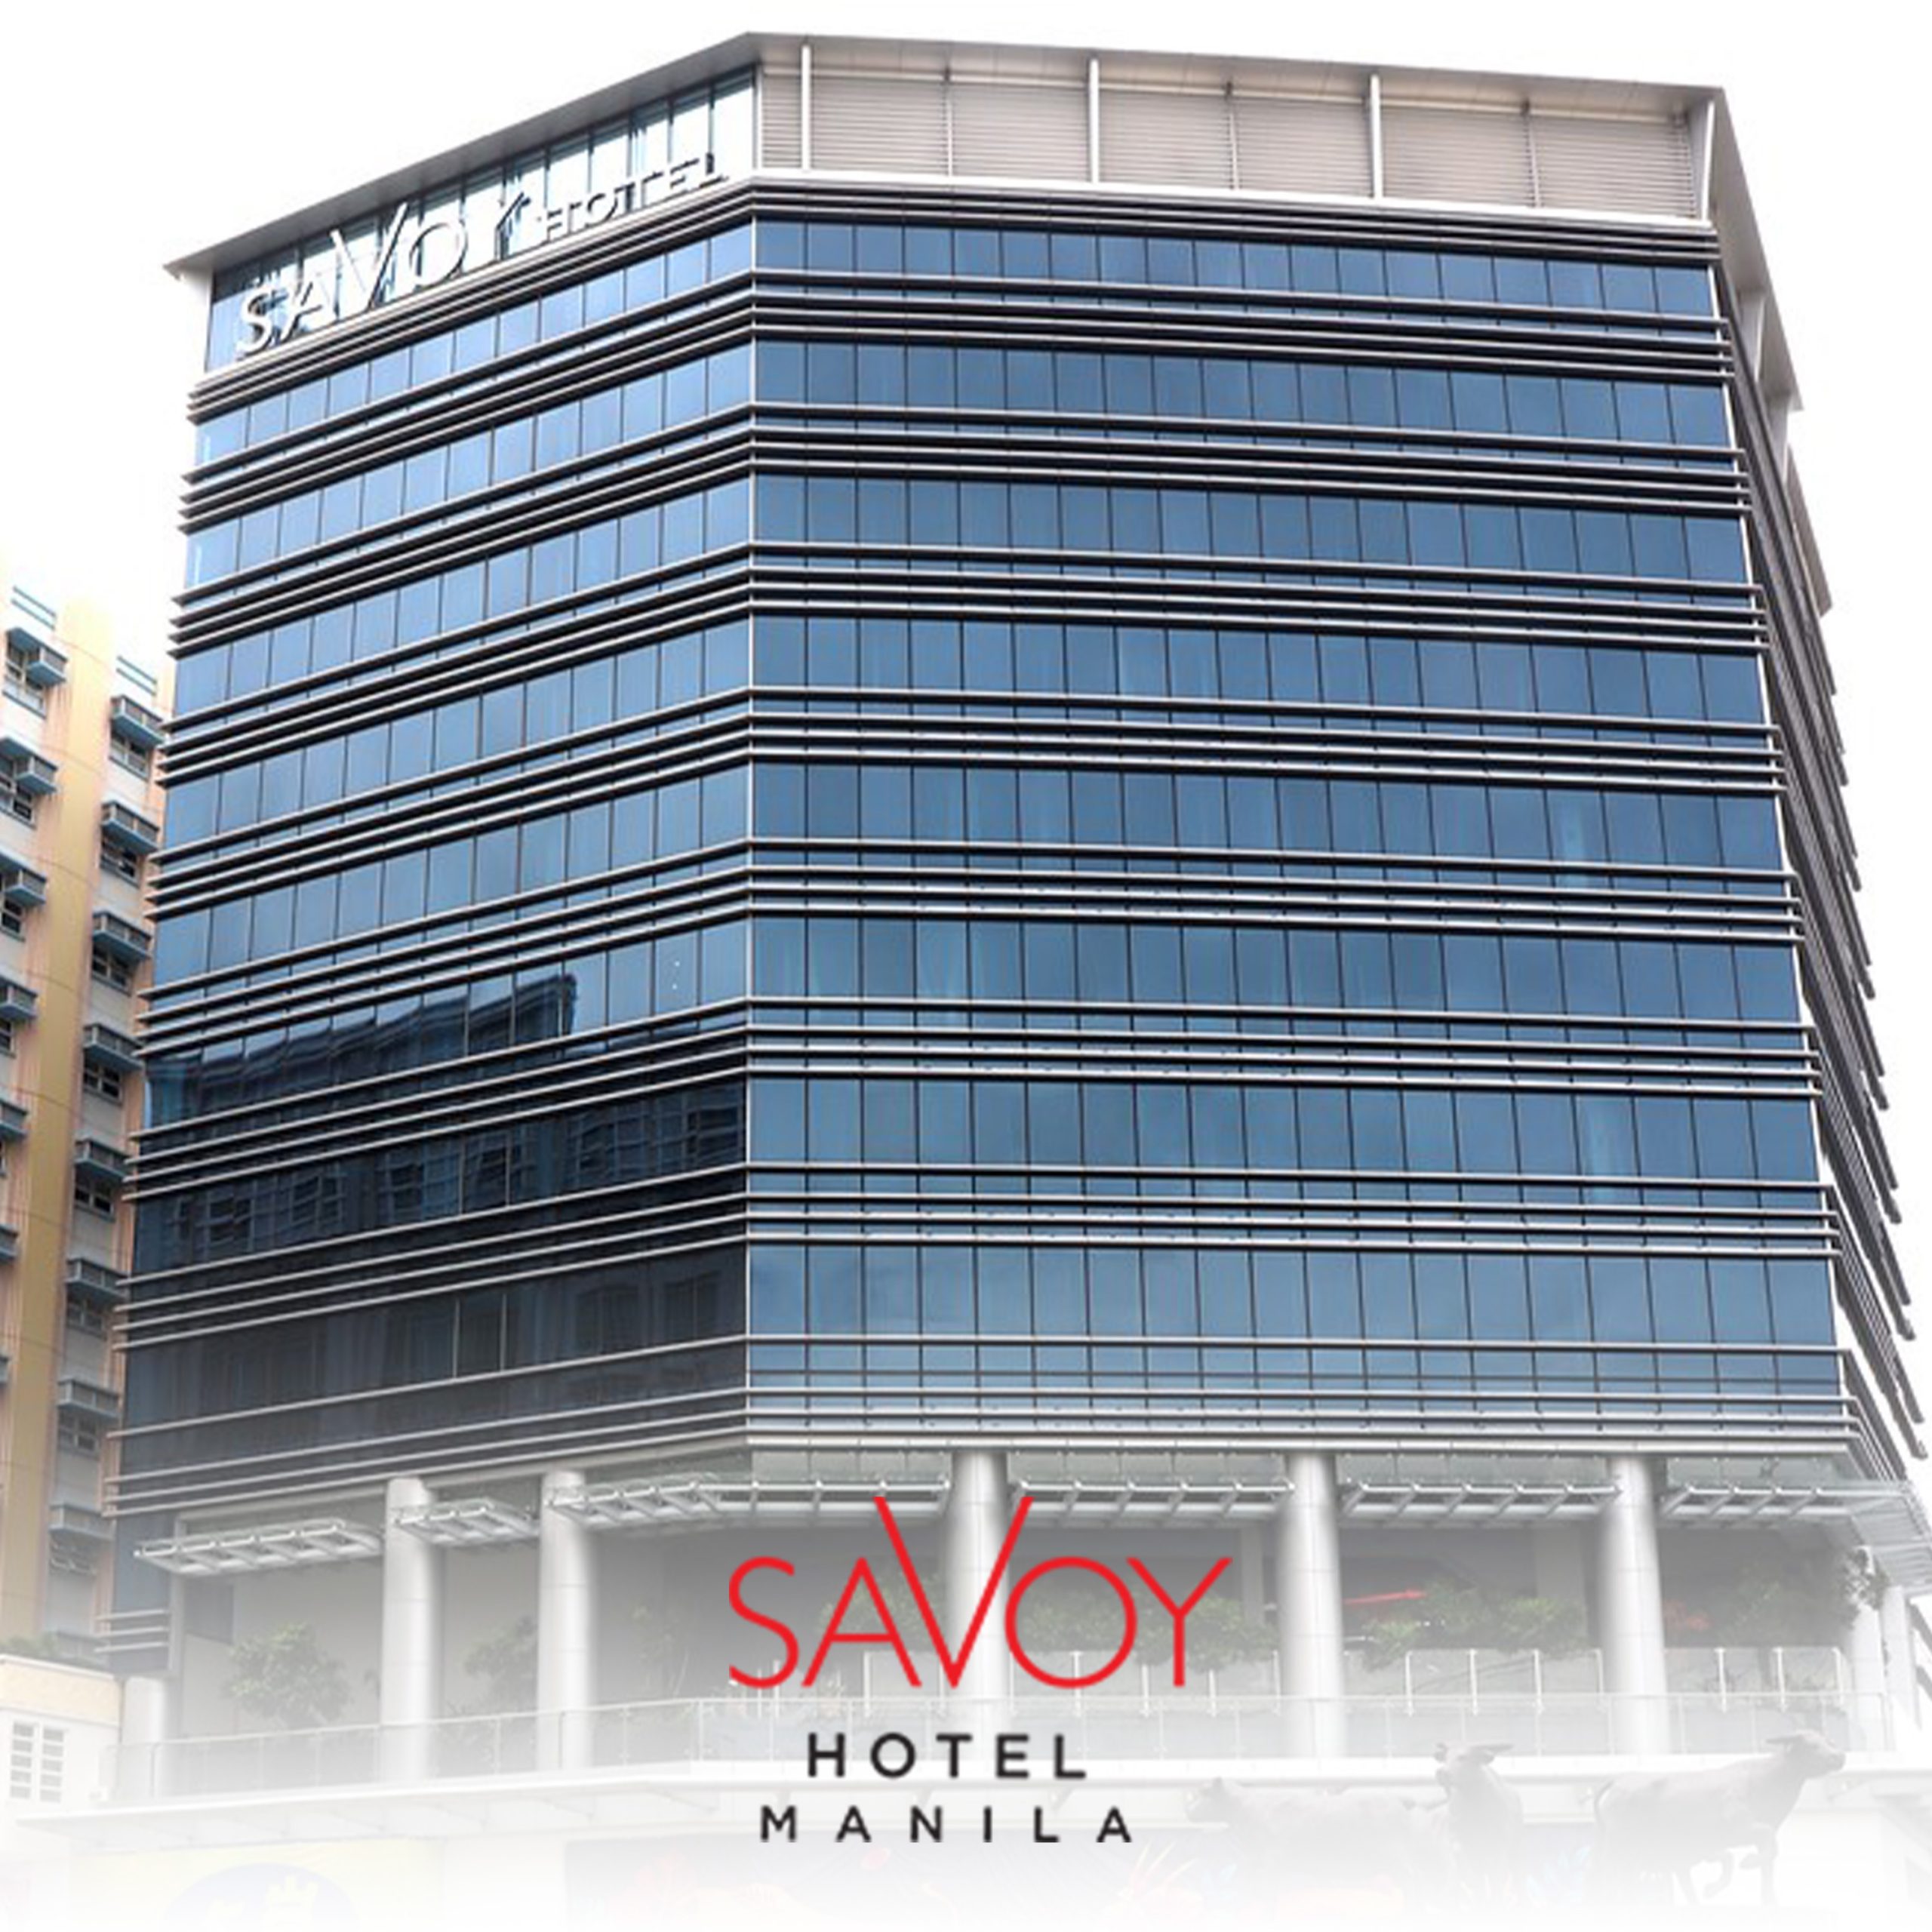 Savoy Hotel Newport